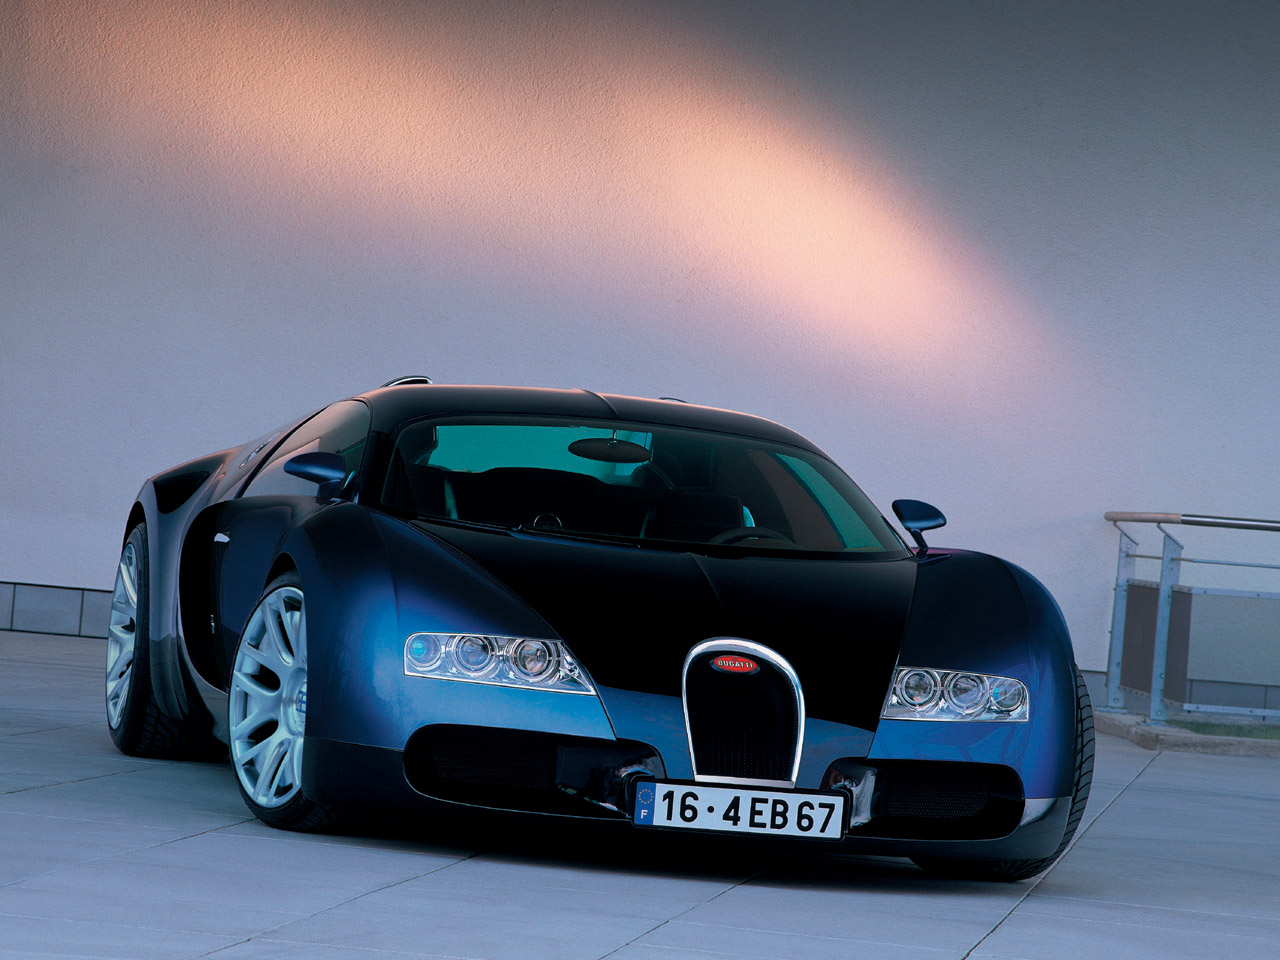 2004 Bugatti Eb 16/4 Veyron - Bugatti 16 4 Veyron Concept - HD Wallpaper 